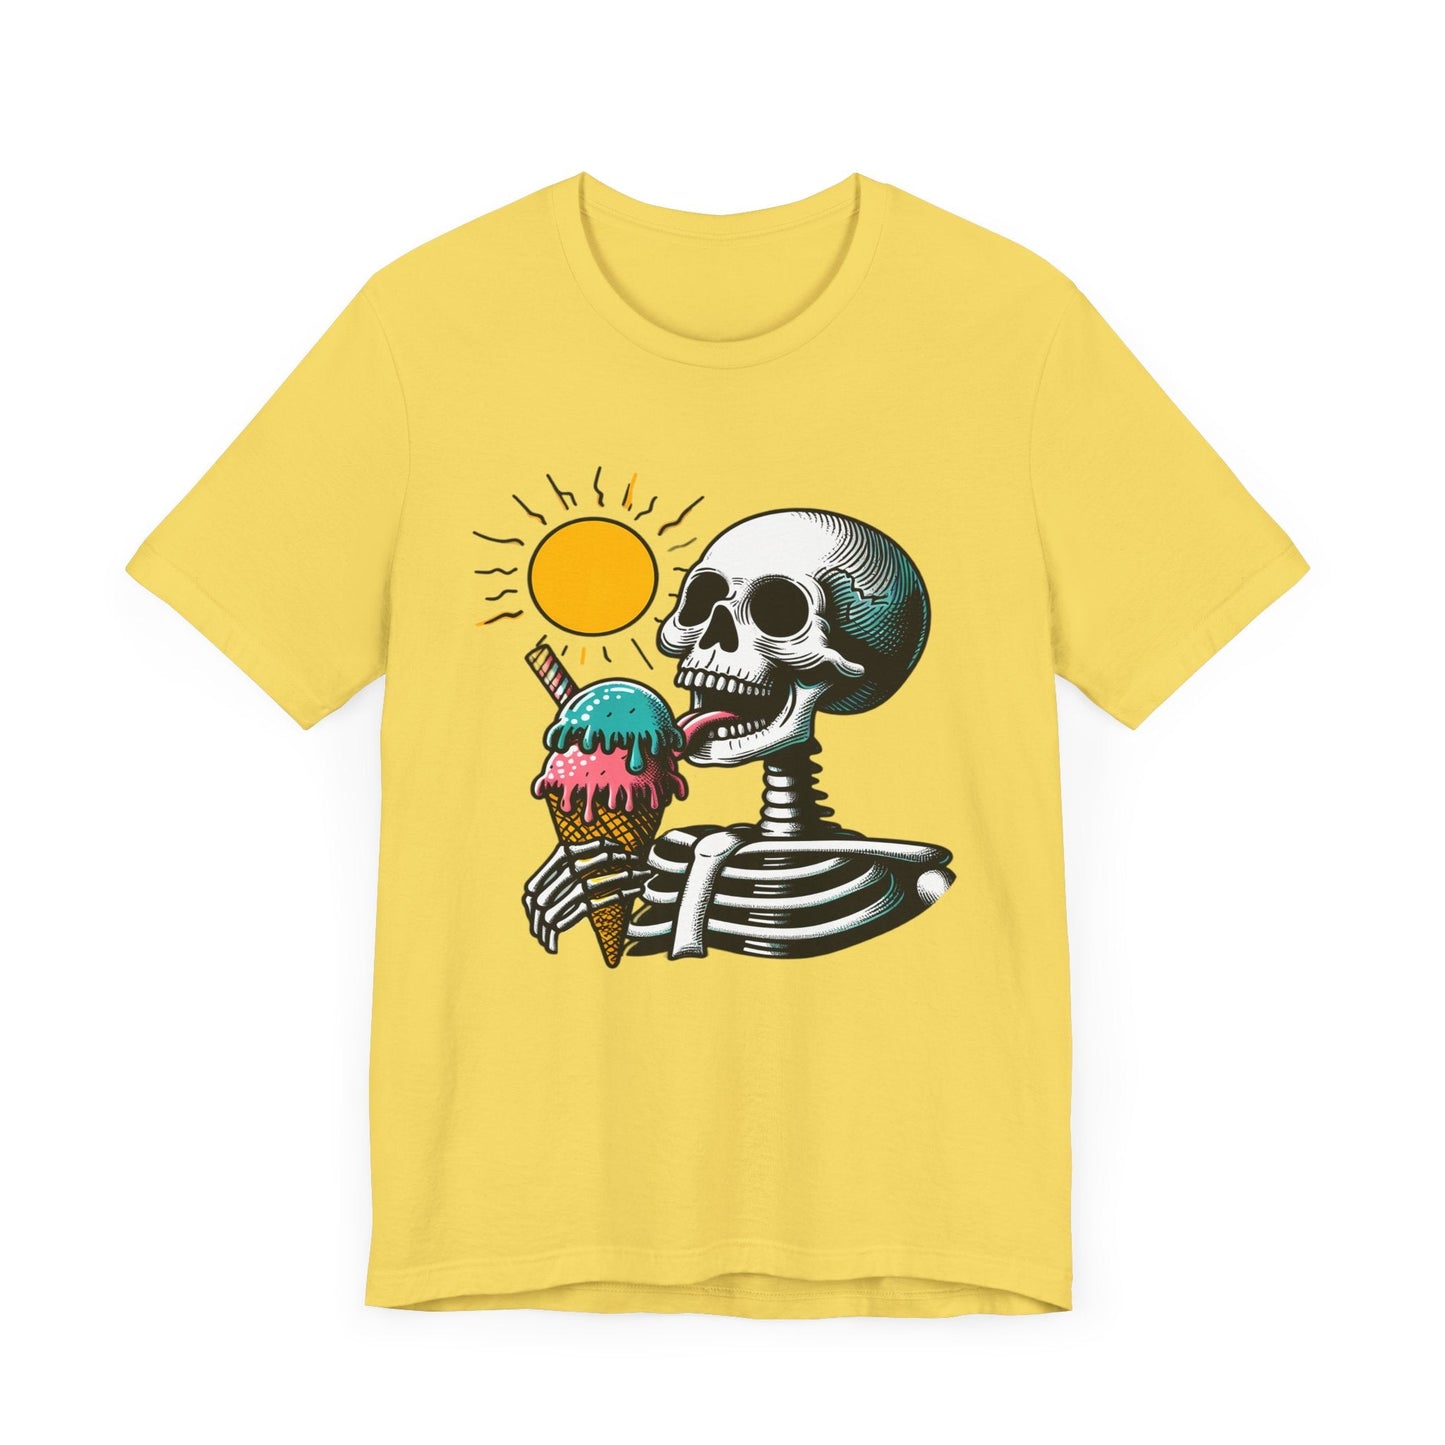 Skeleton Ice Cream Short Sleeve Tee ShirtT - ShirtVTZdesignsMaize YellowXSclothingCottonCrew neck